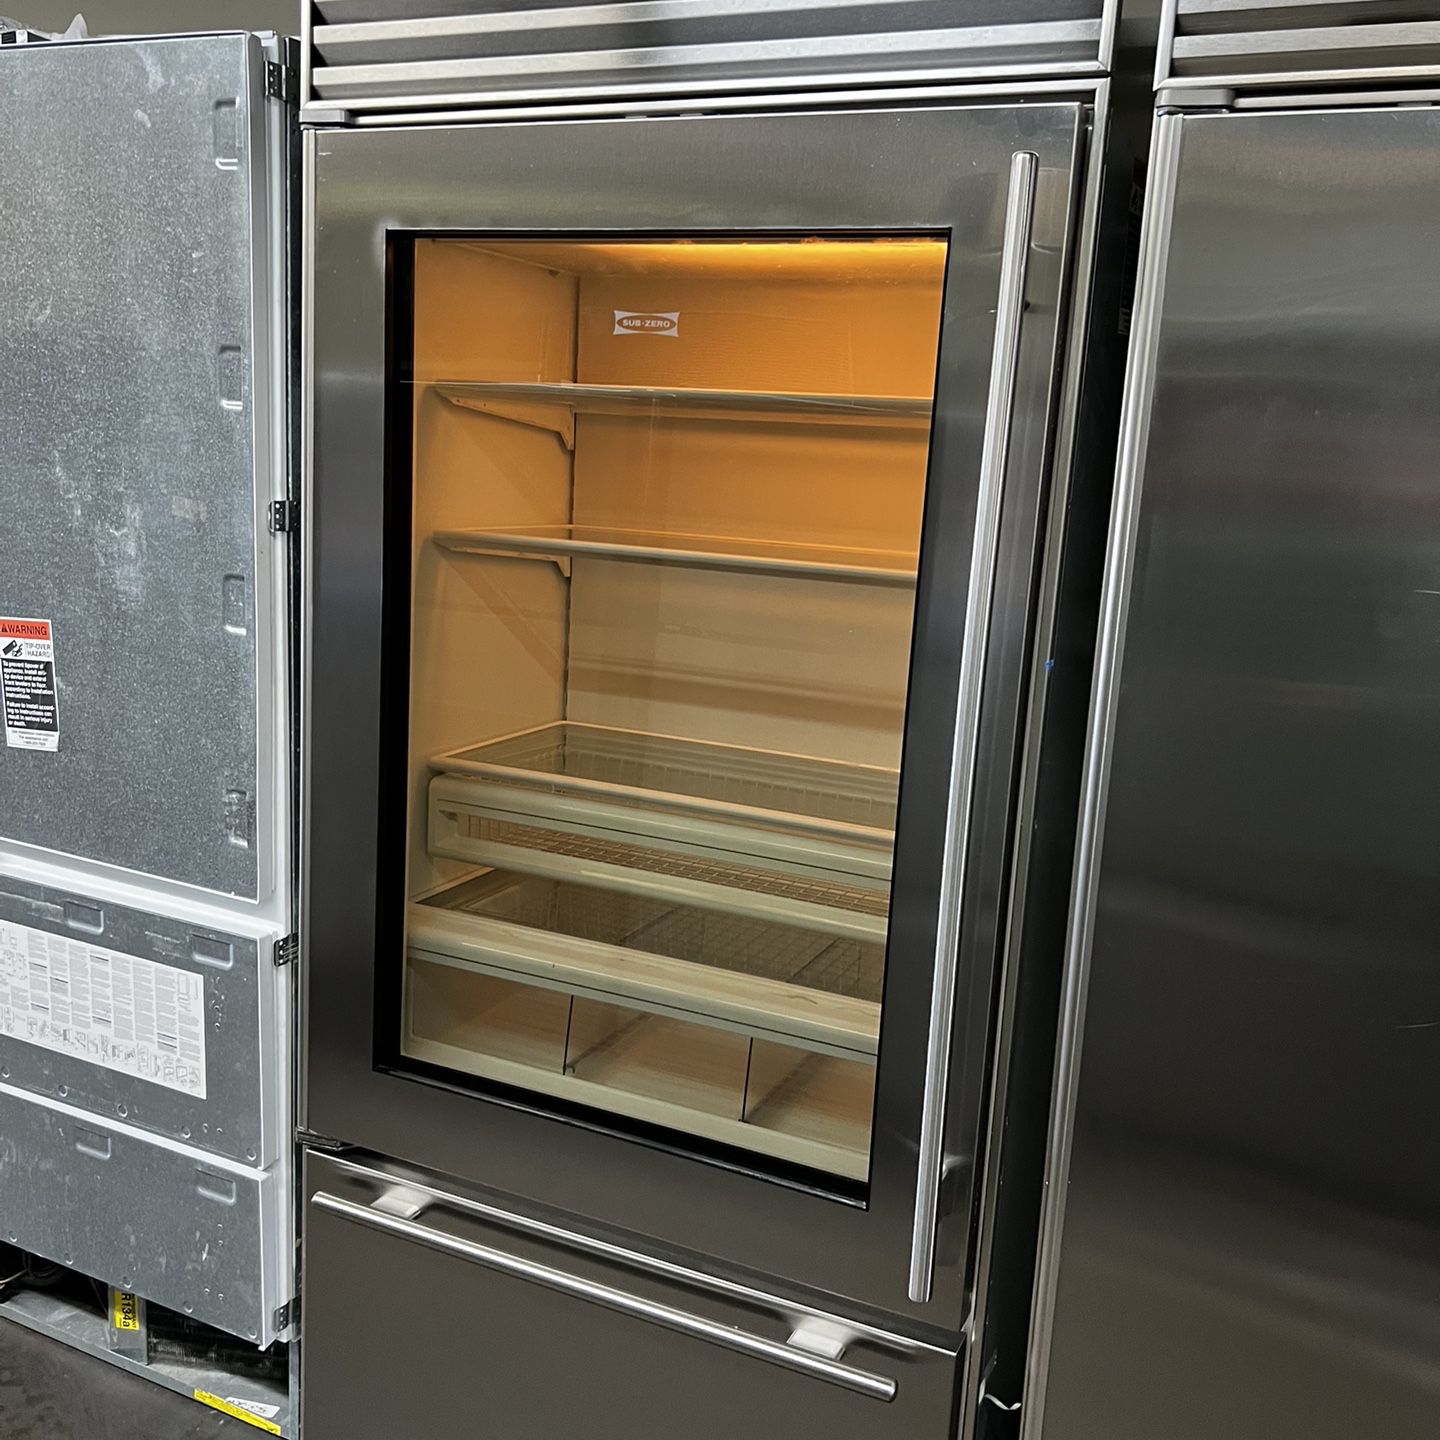 Sub Zero 36”Wide Bottom Freezer Built In Refrigerator With Glass View